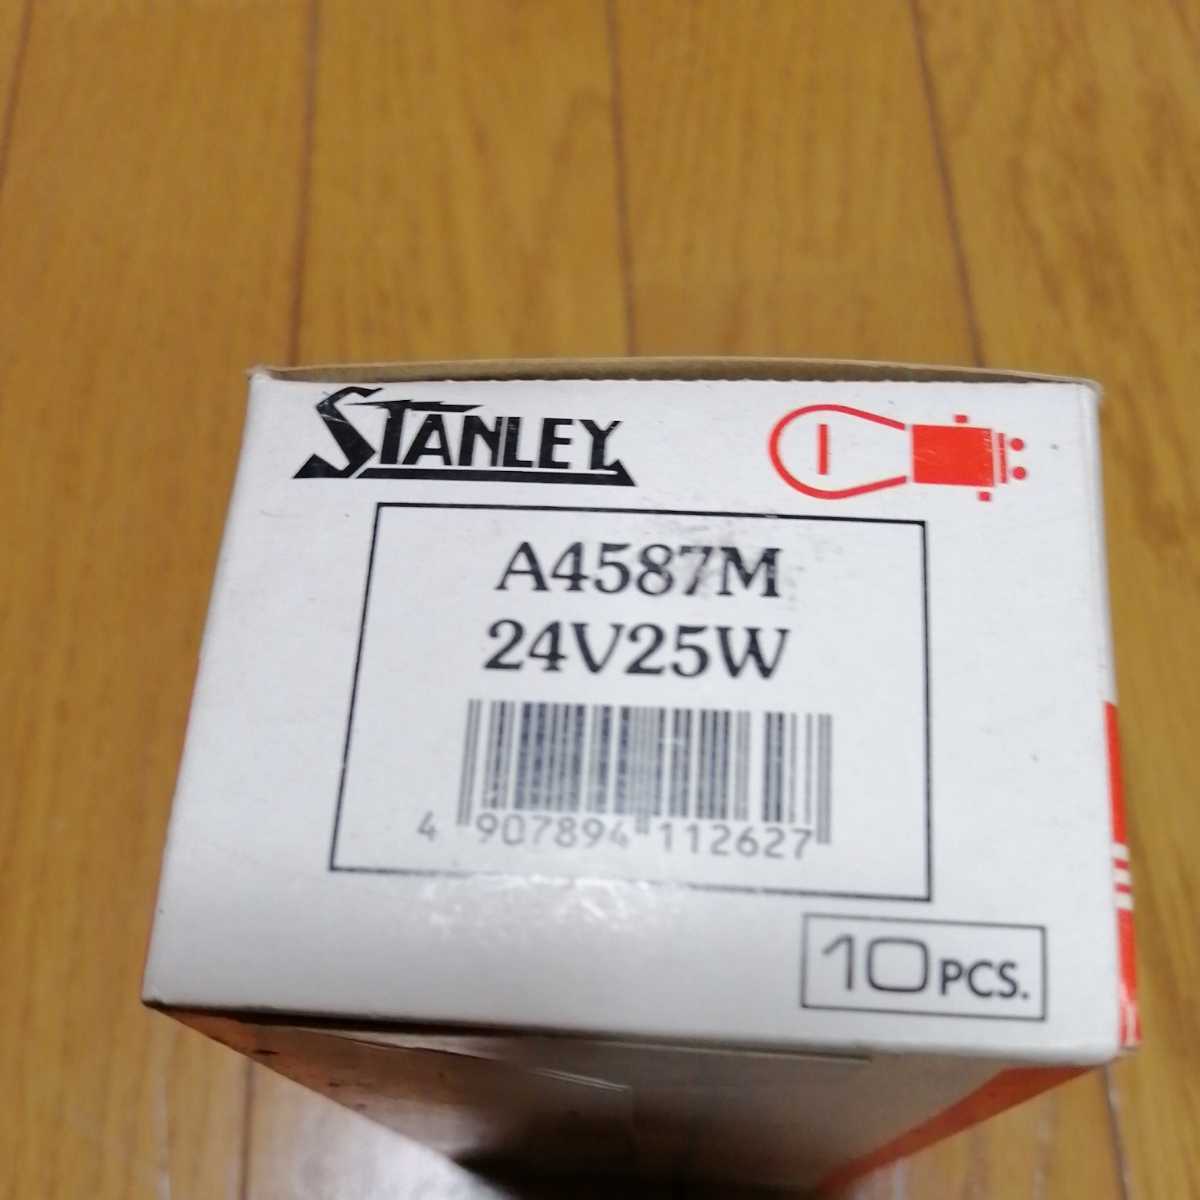  Stanley лампа A4587M 24V25W 5 шт. комплект 